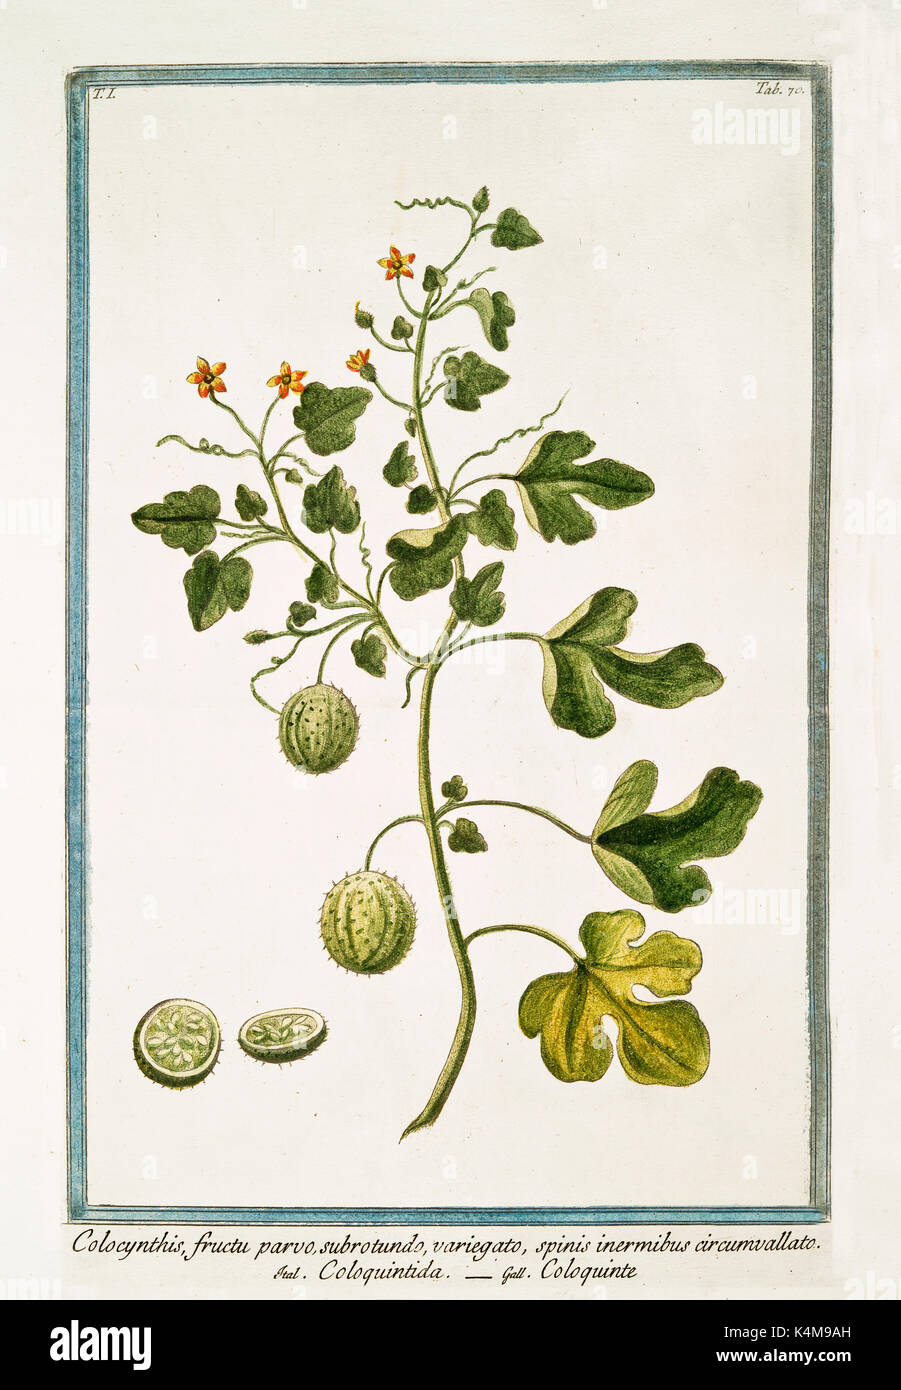 Old illustration of Colocyntis fructu parvo (Citrullus colocynthis). By G. Bonelli on Hortus Romanus, publ. N. Martelli, Rome, 1772 – 93 Stock Photo